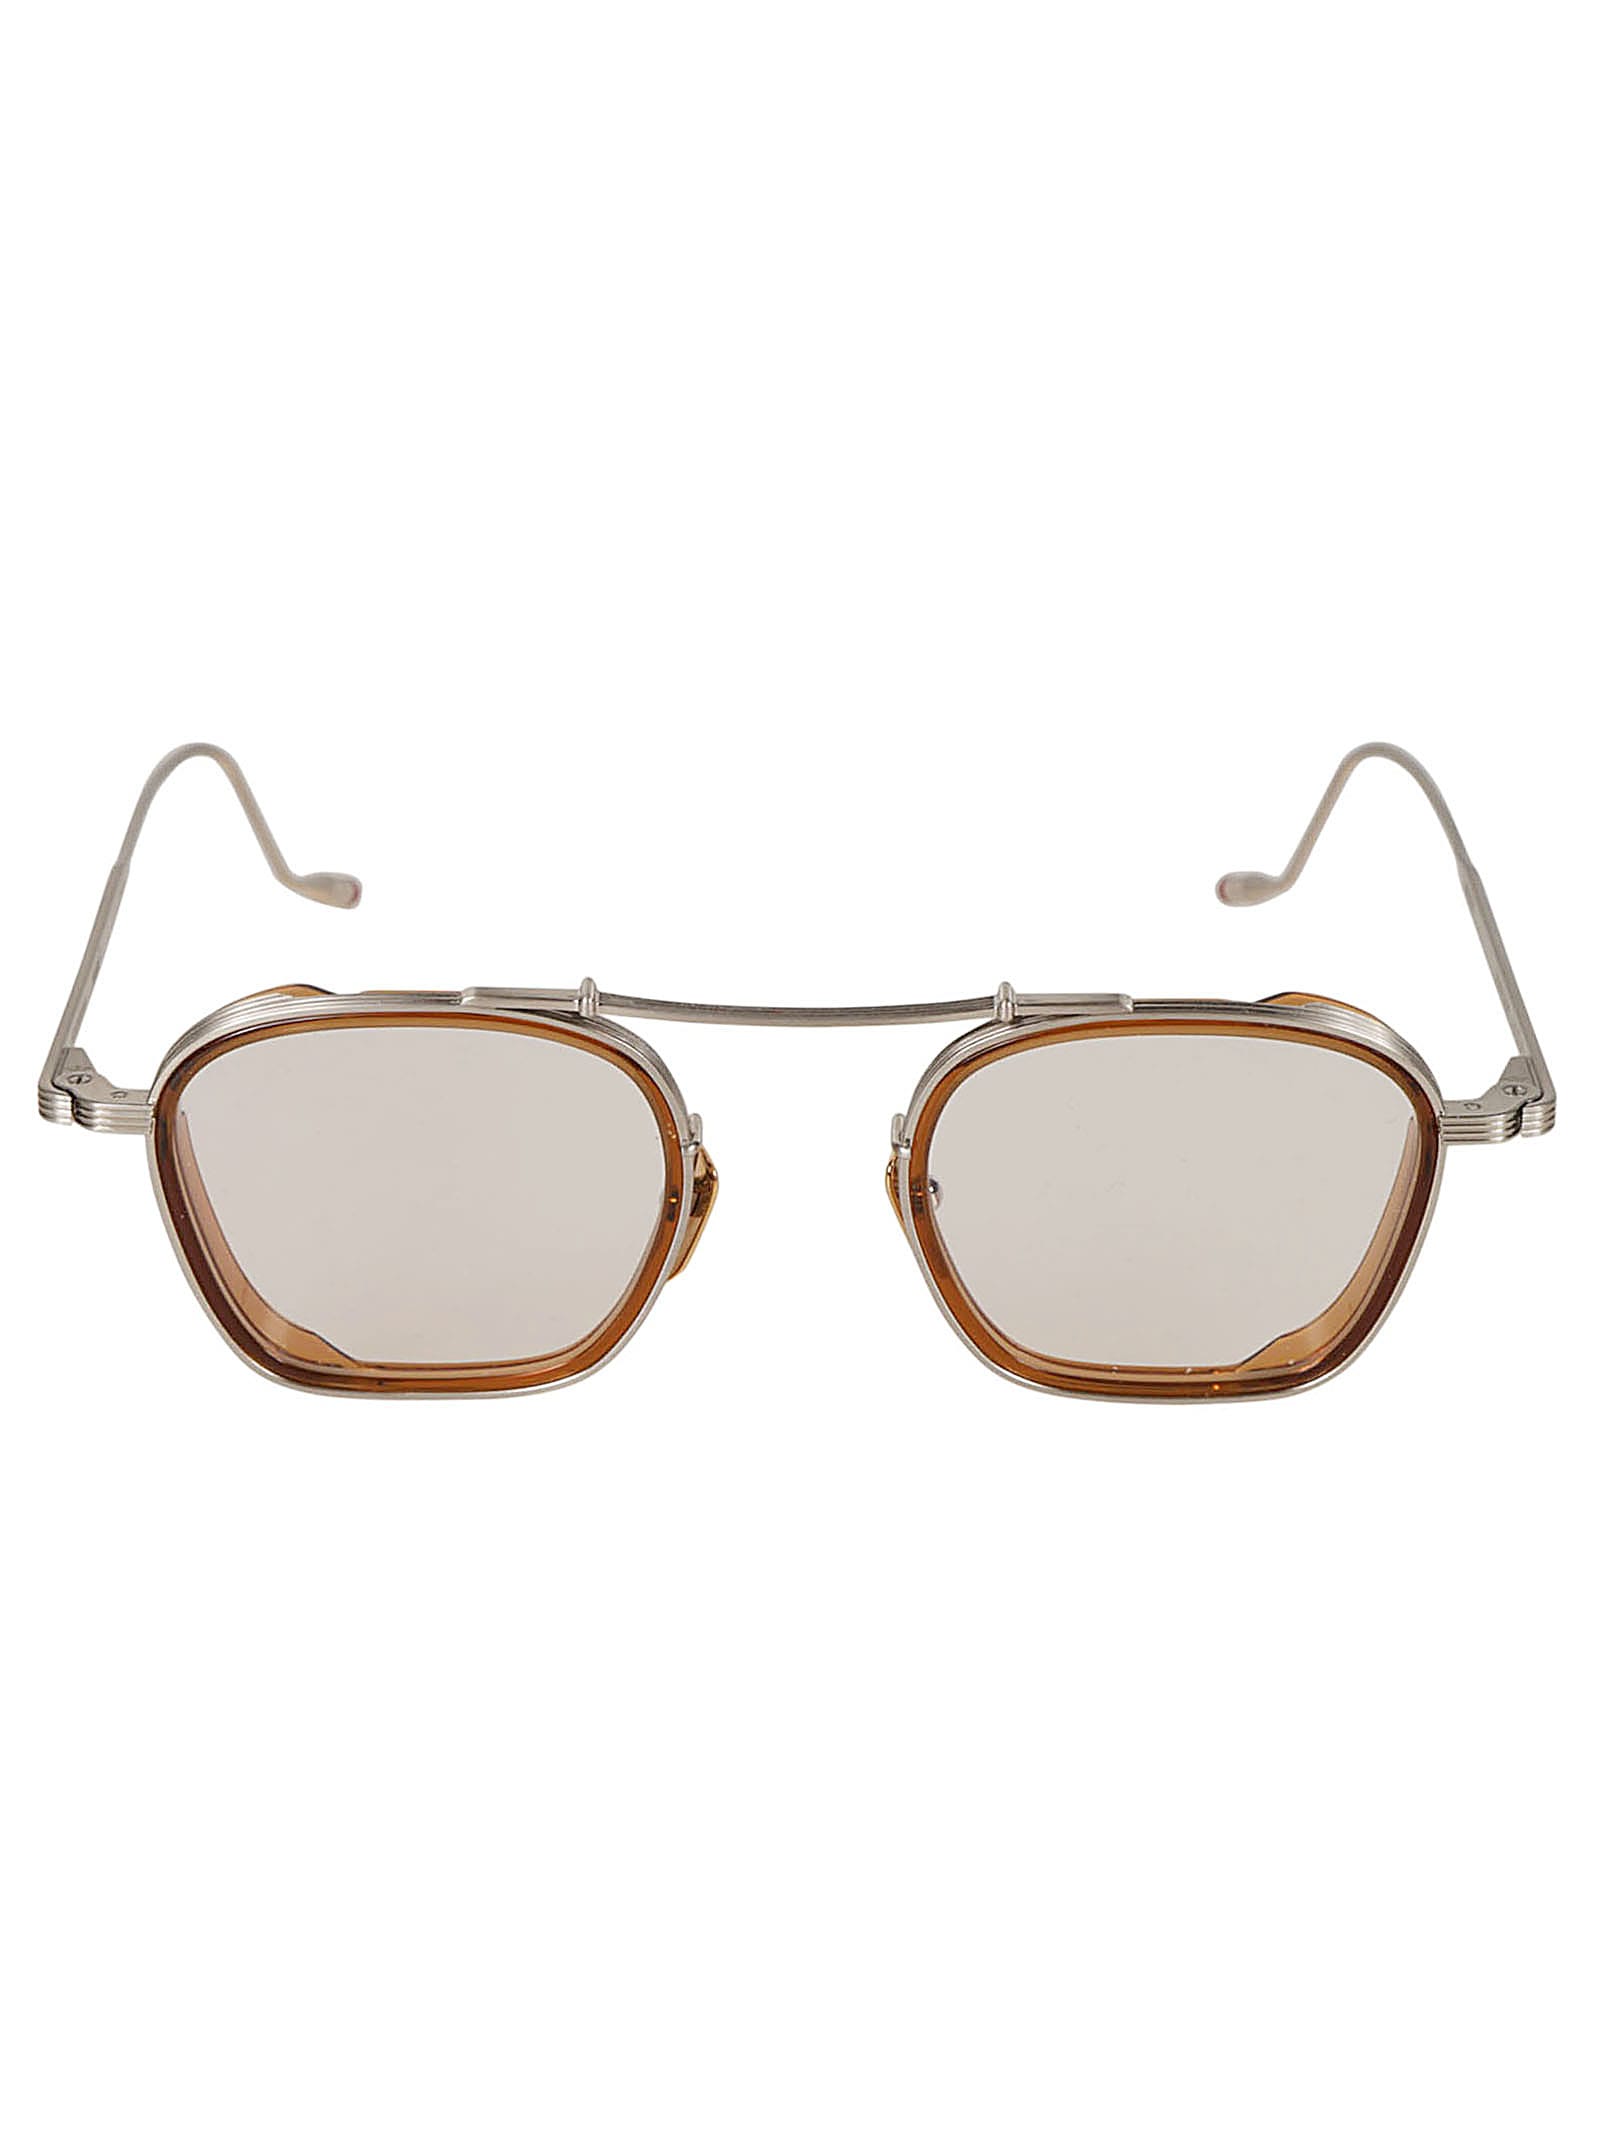 Baudelaire 2 Frame Glasses